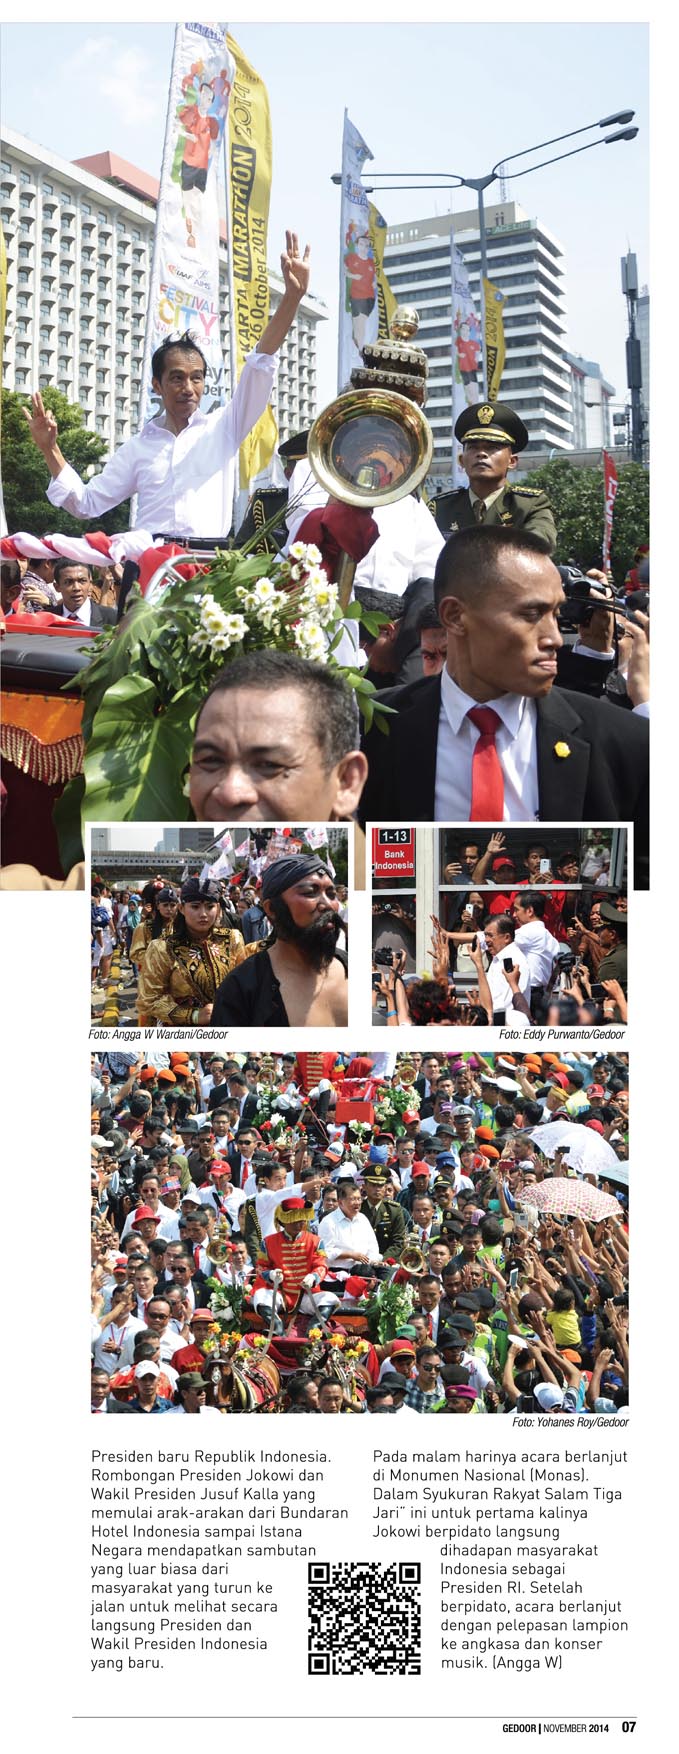 Kirab Budaya Antar Jokowi - Jusuf Kalla Menuju Istana